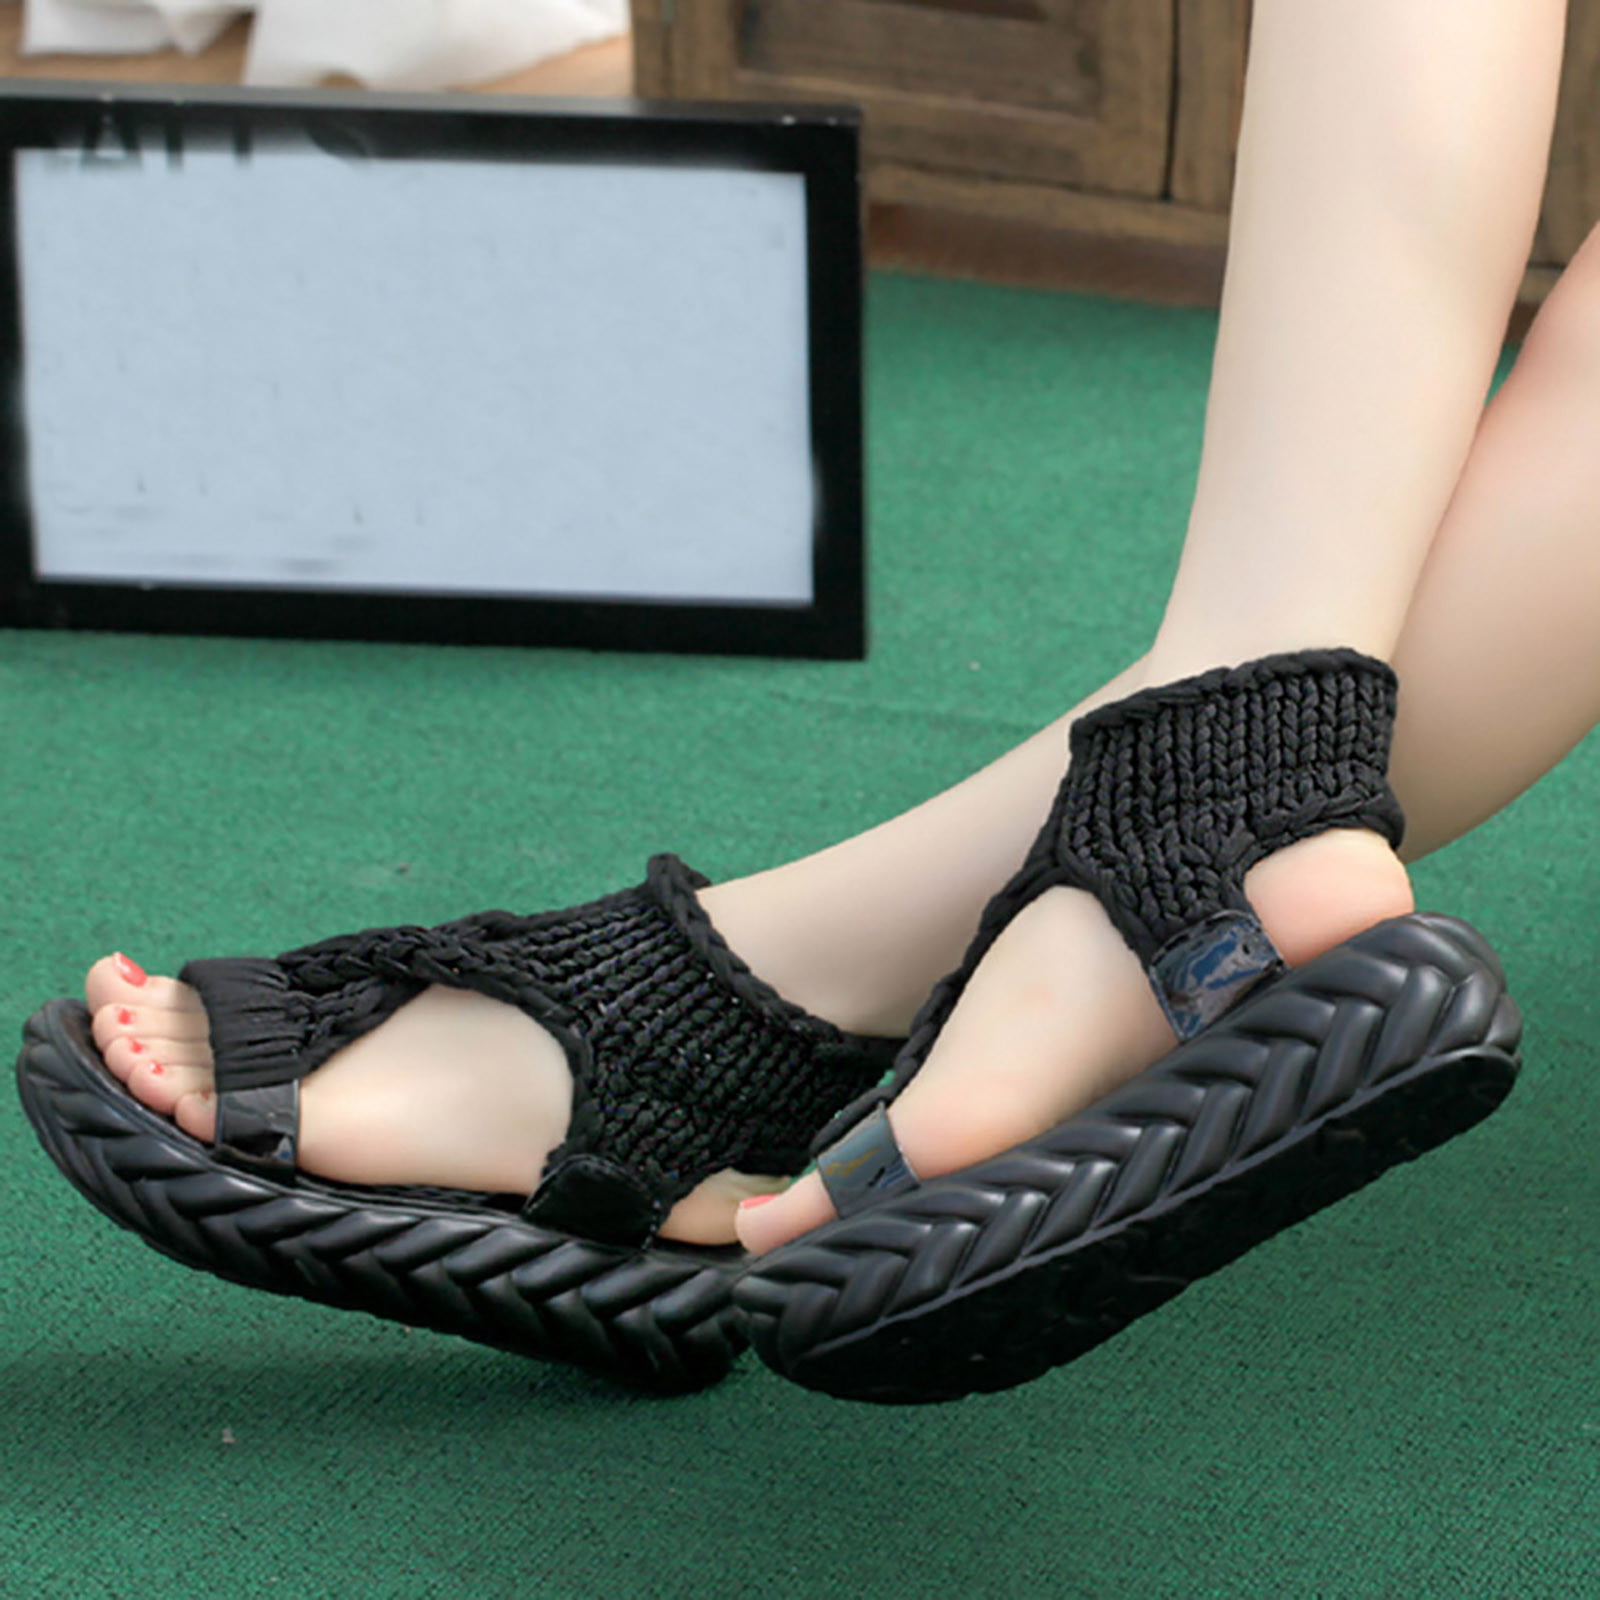 eczipvz Walking Shoes Women Women's Bloom comfort sandal with +Comfort Foam  and Wide Widths Available